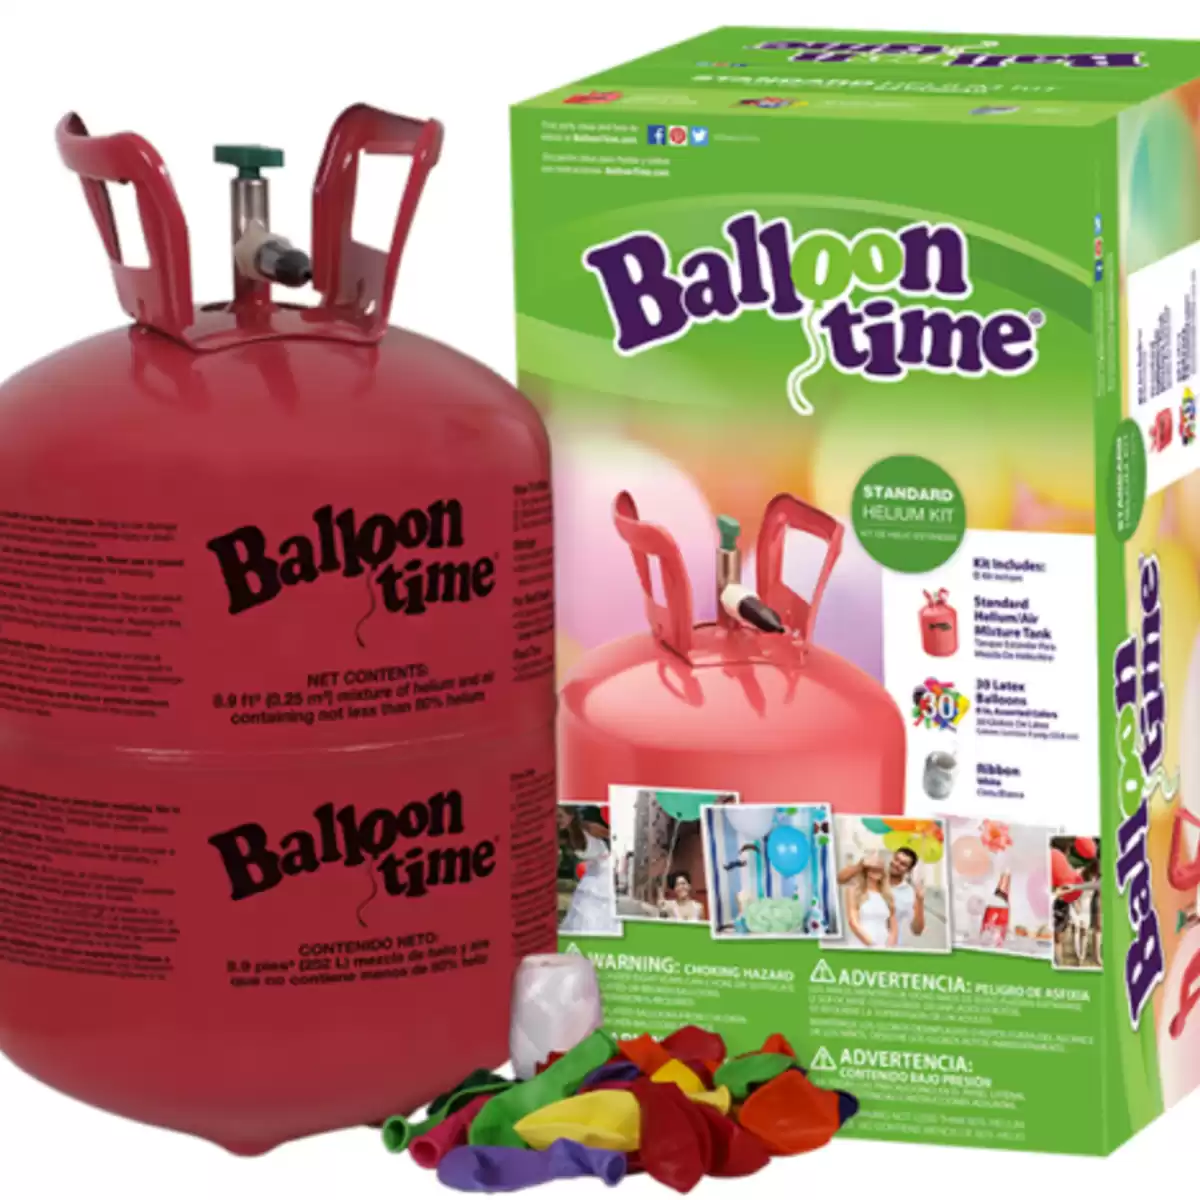 Helio dujos „Balloon Time 30"